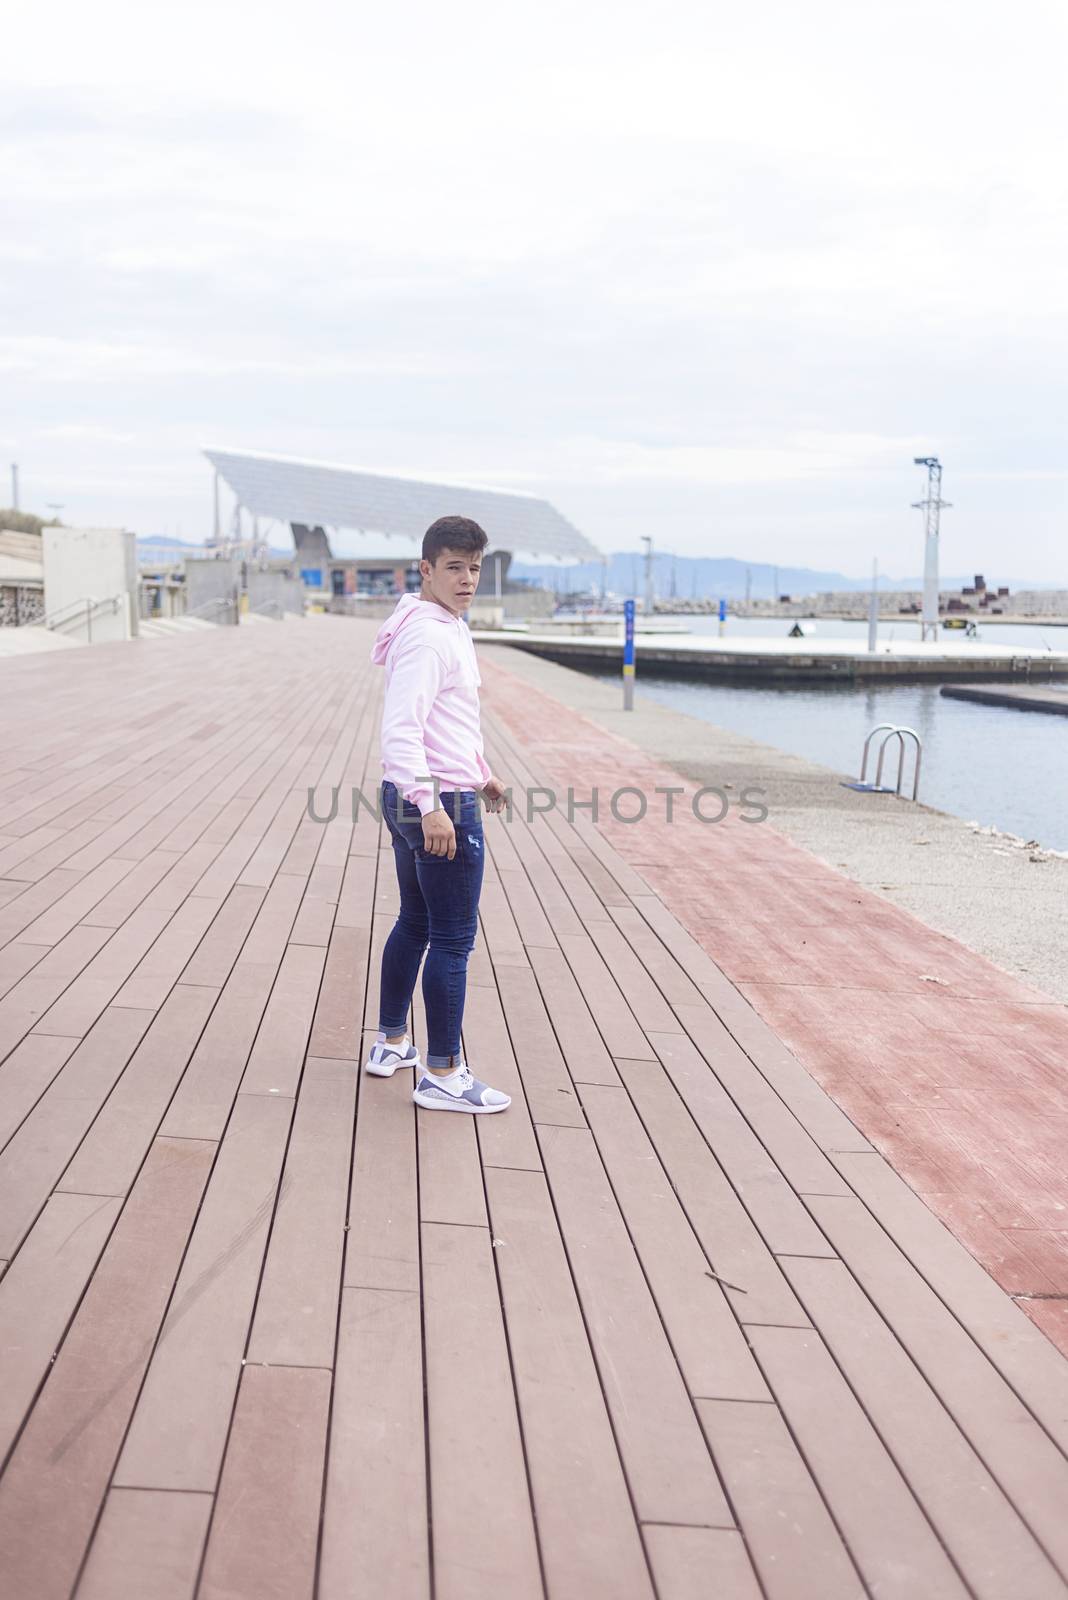 Young teenager walking on promenade while looking at camera